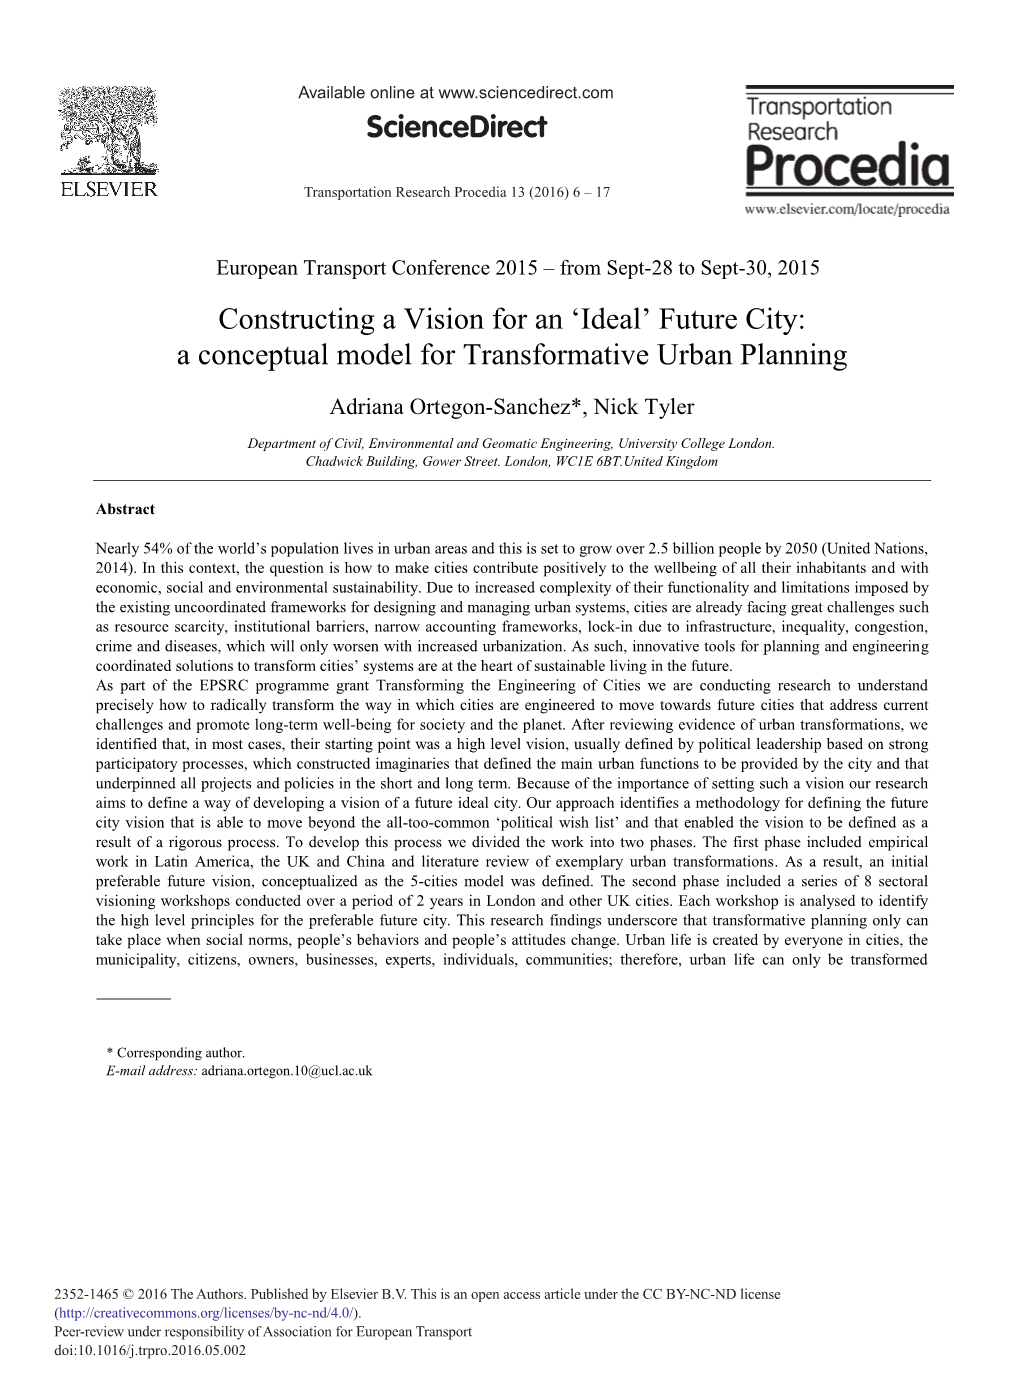 Future City: a Conceptual Model for Transformative Urban Planning